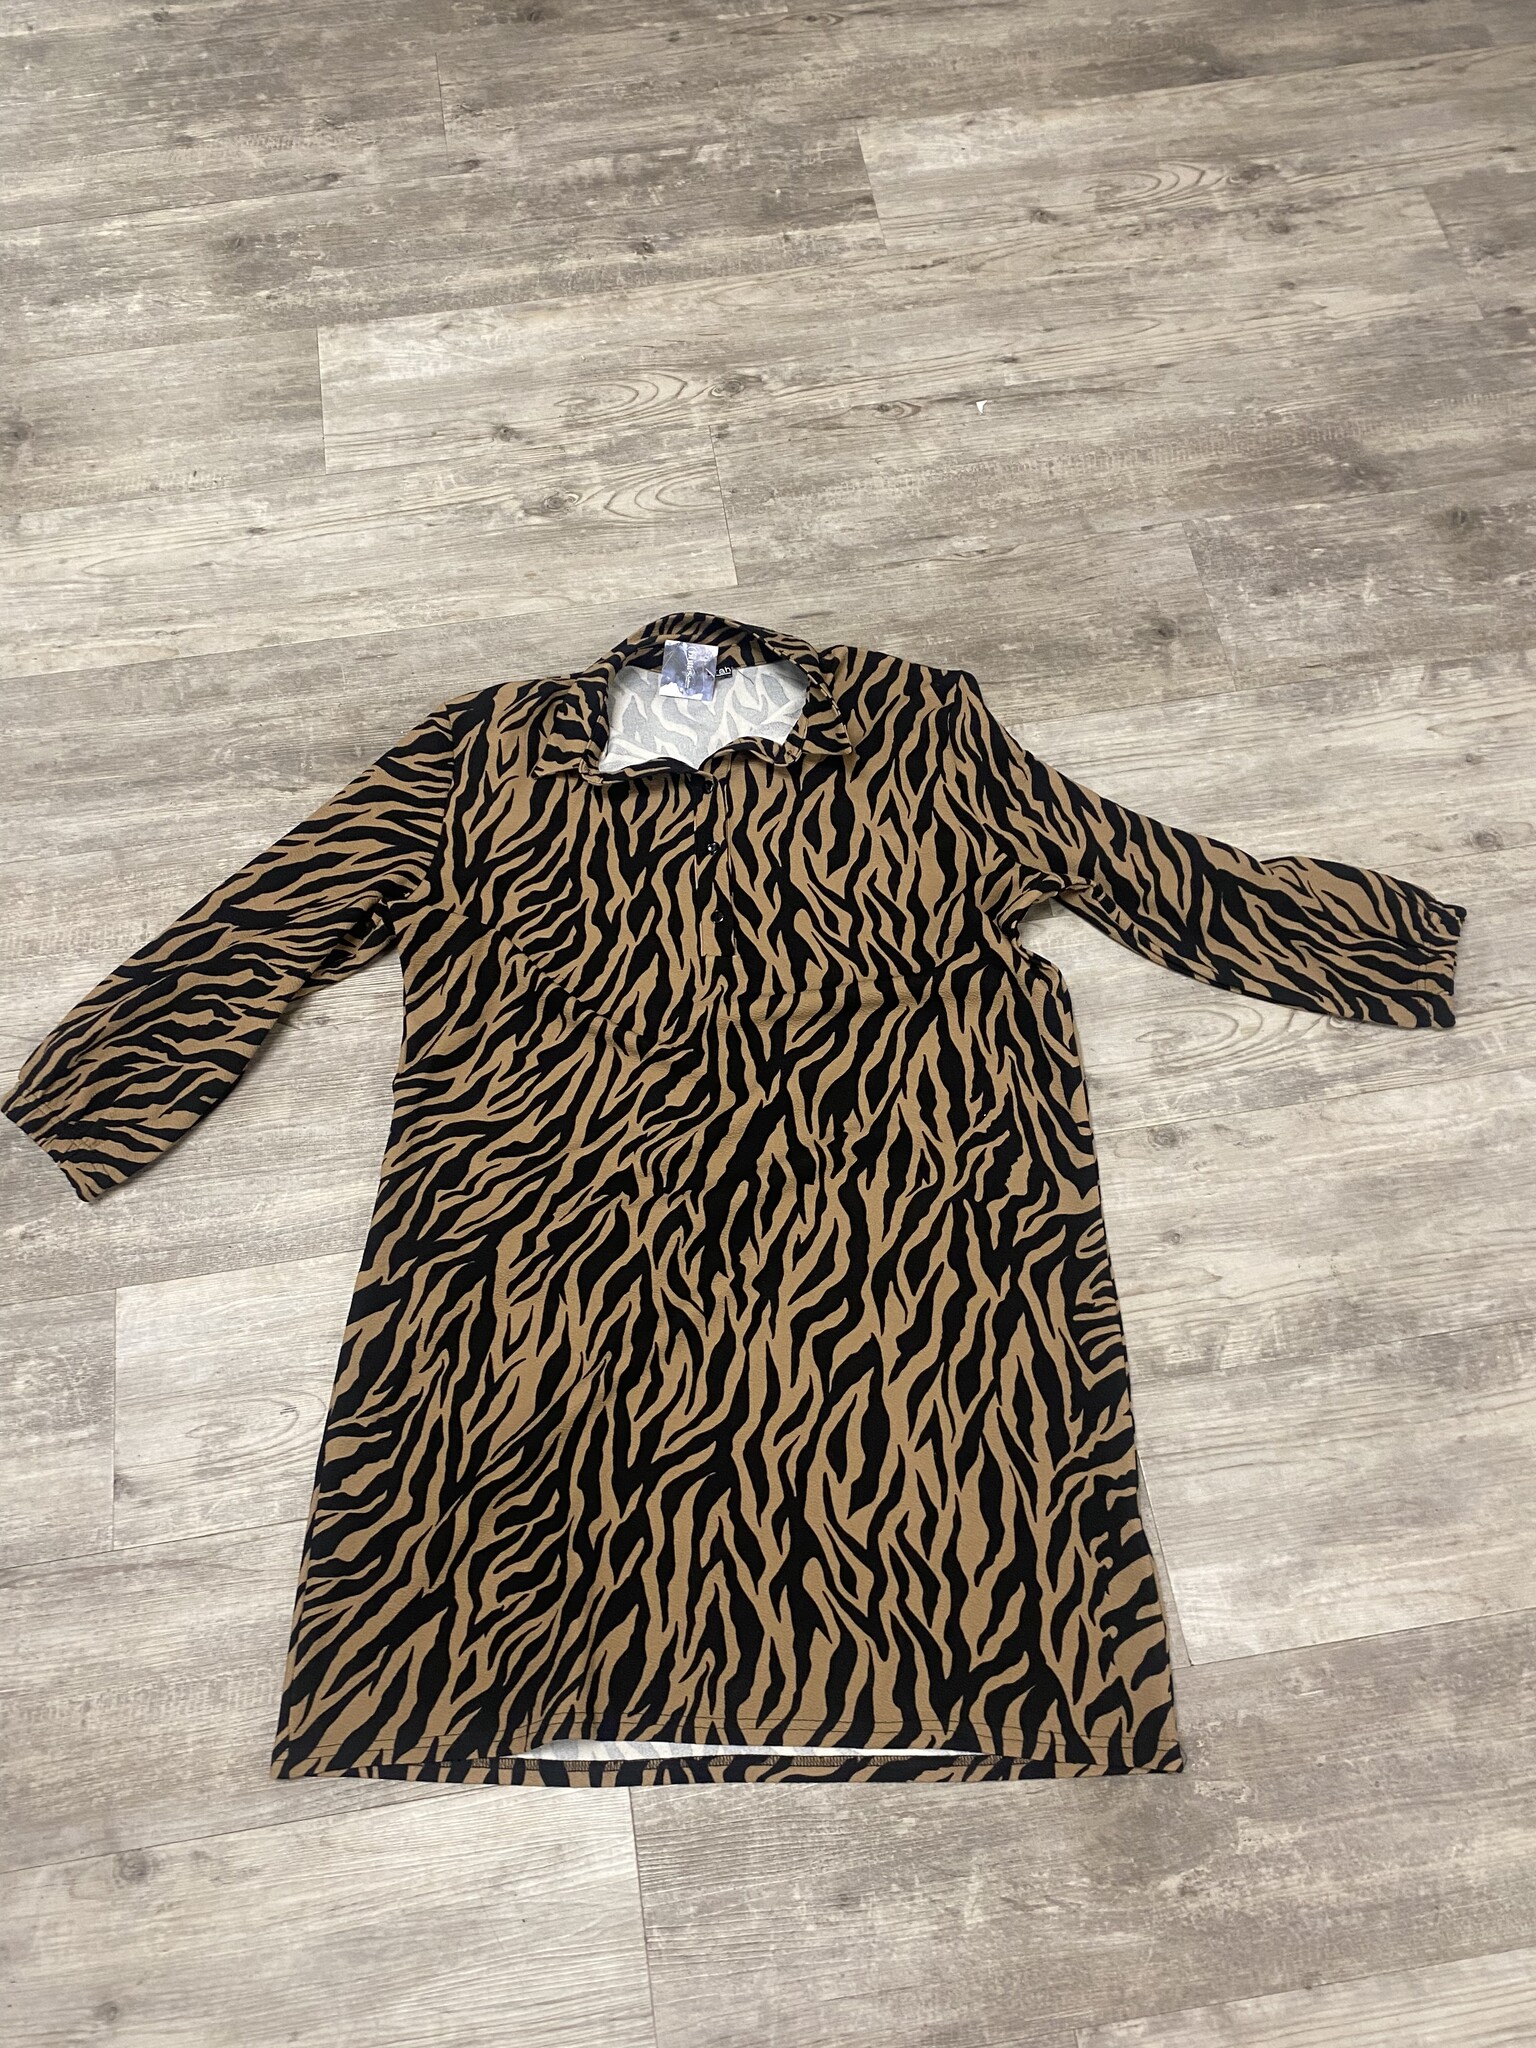 Tan and Black Zebra Print Dress - Size 44